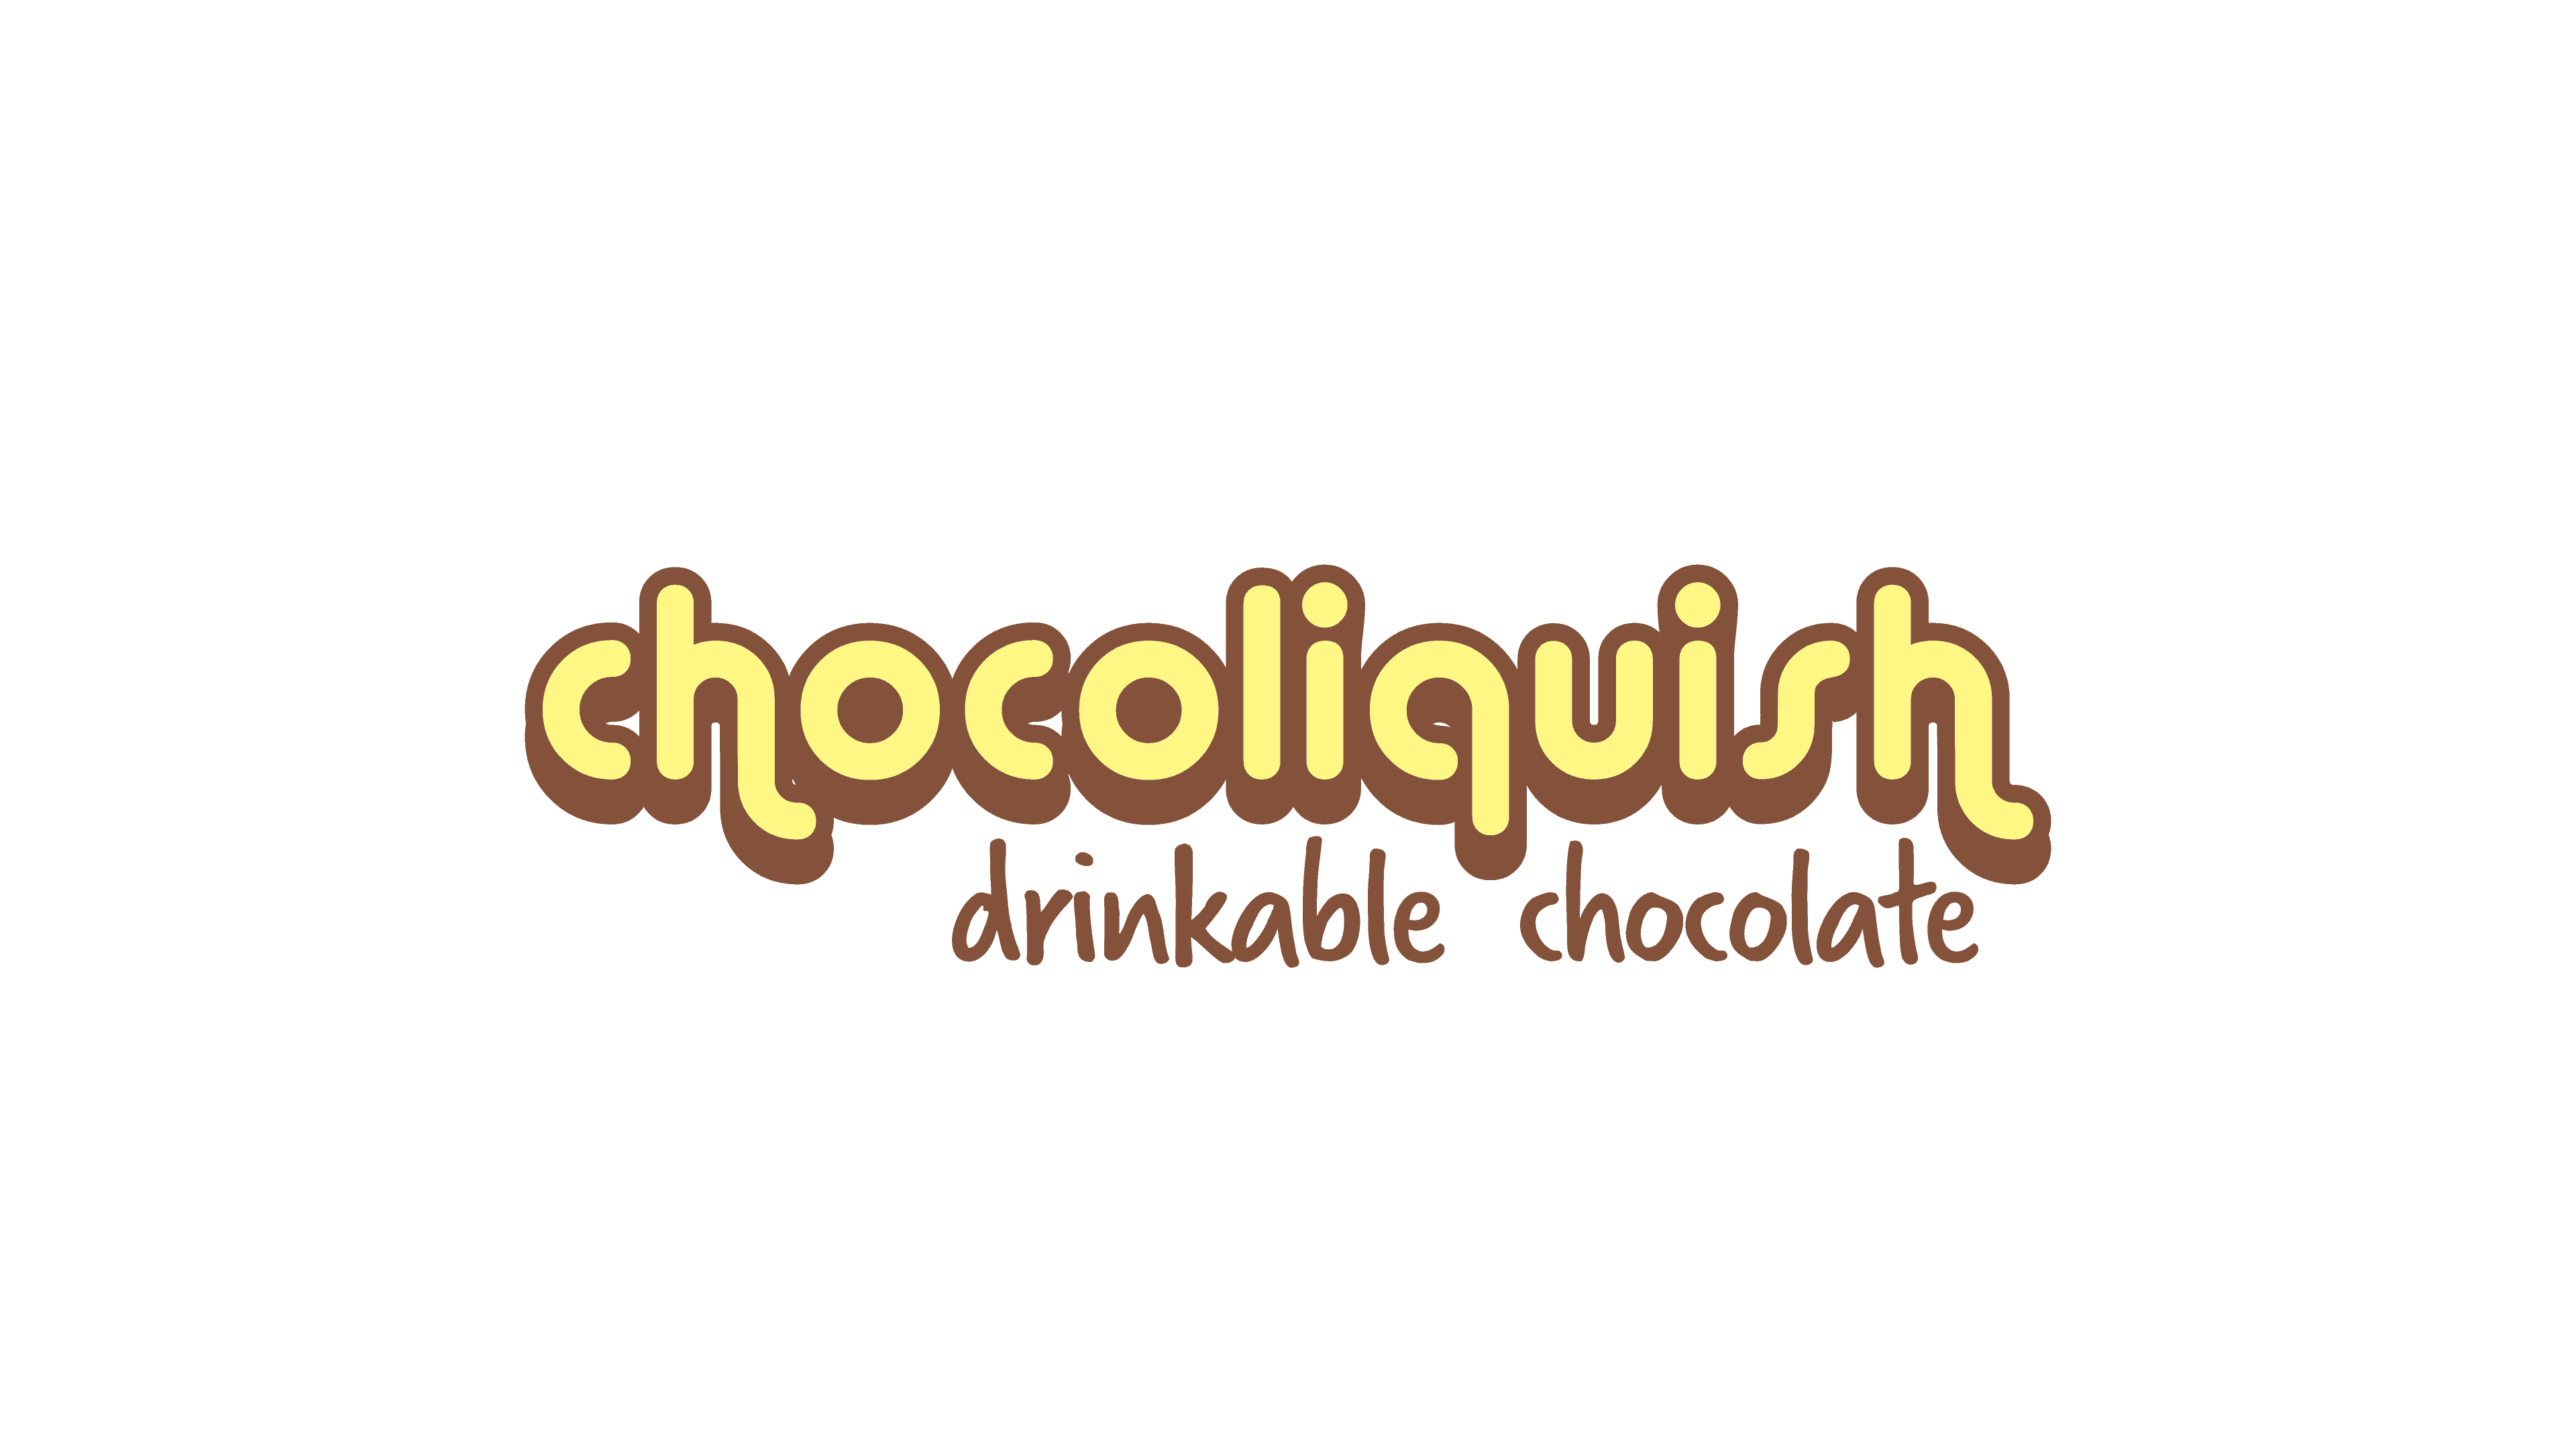 chocoliqish drinkable chocolate logo